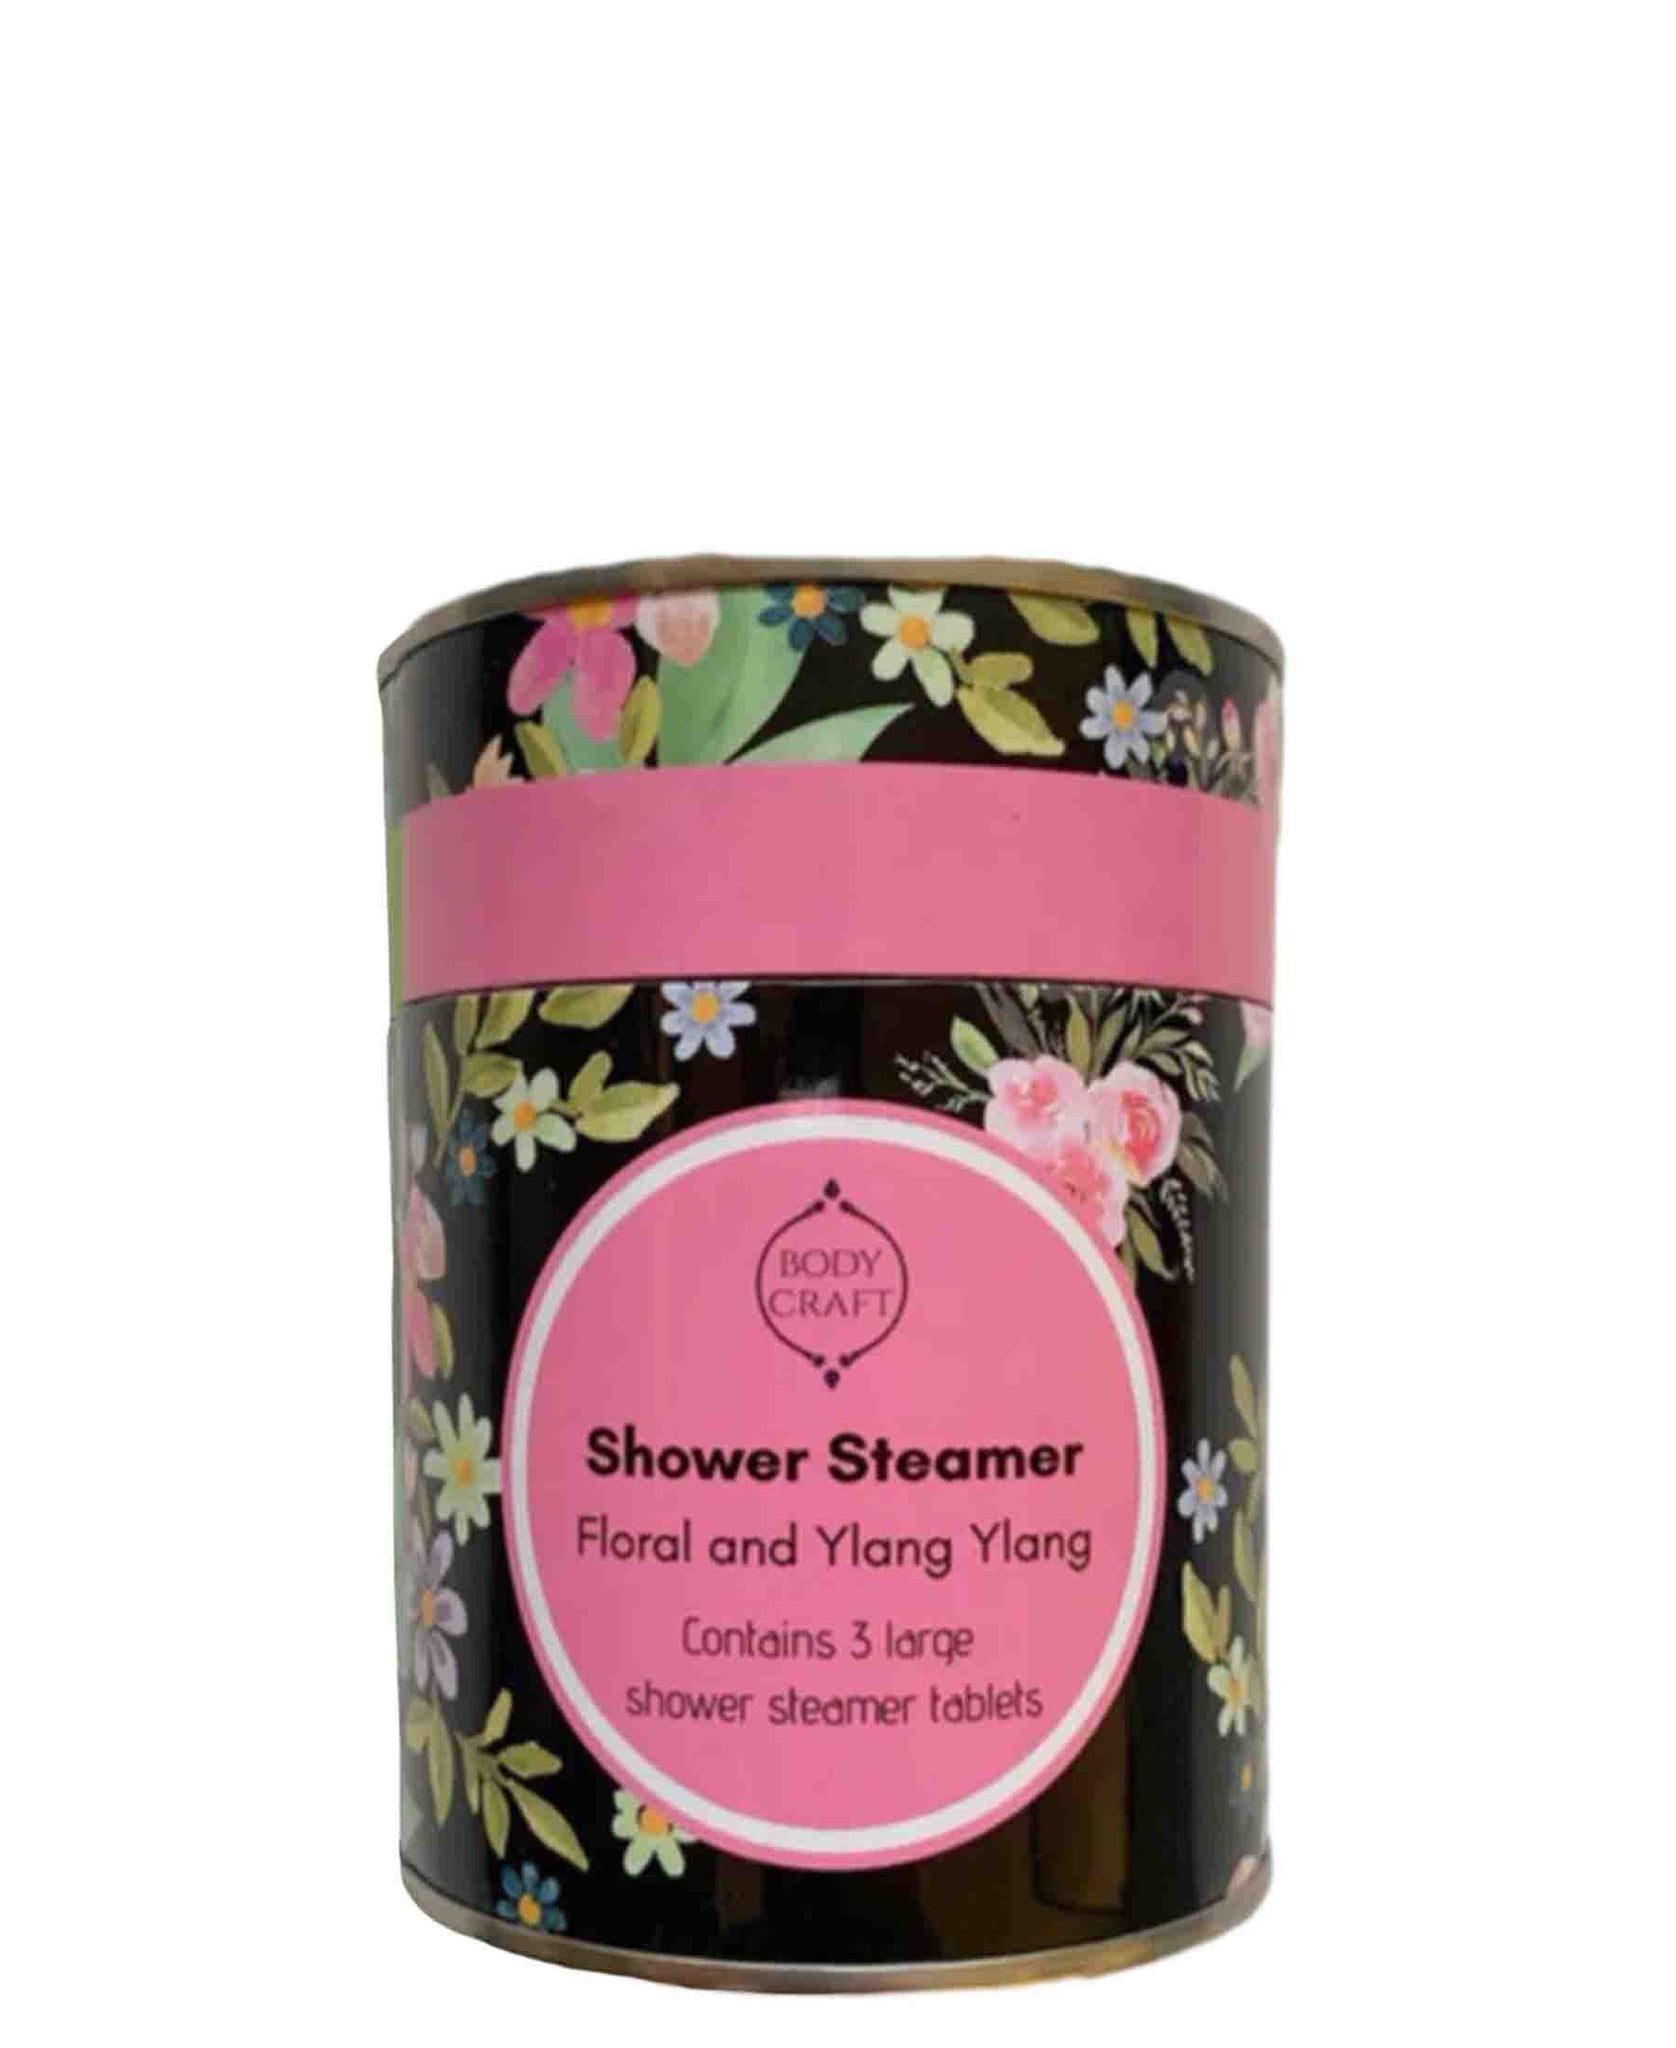 Floral and Ylang Ylang Shower Steamer